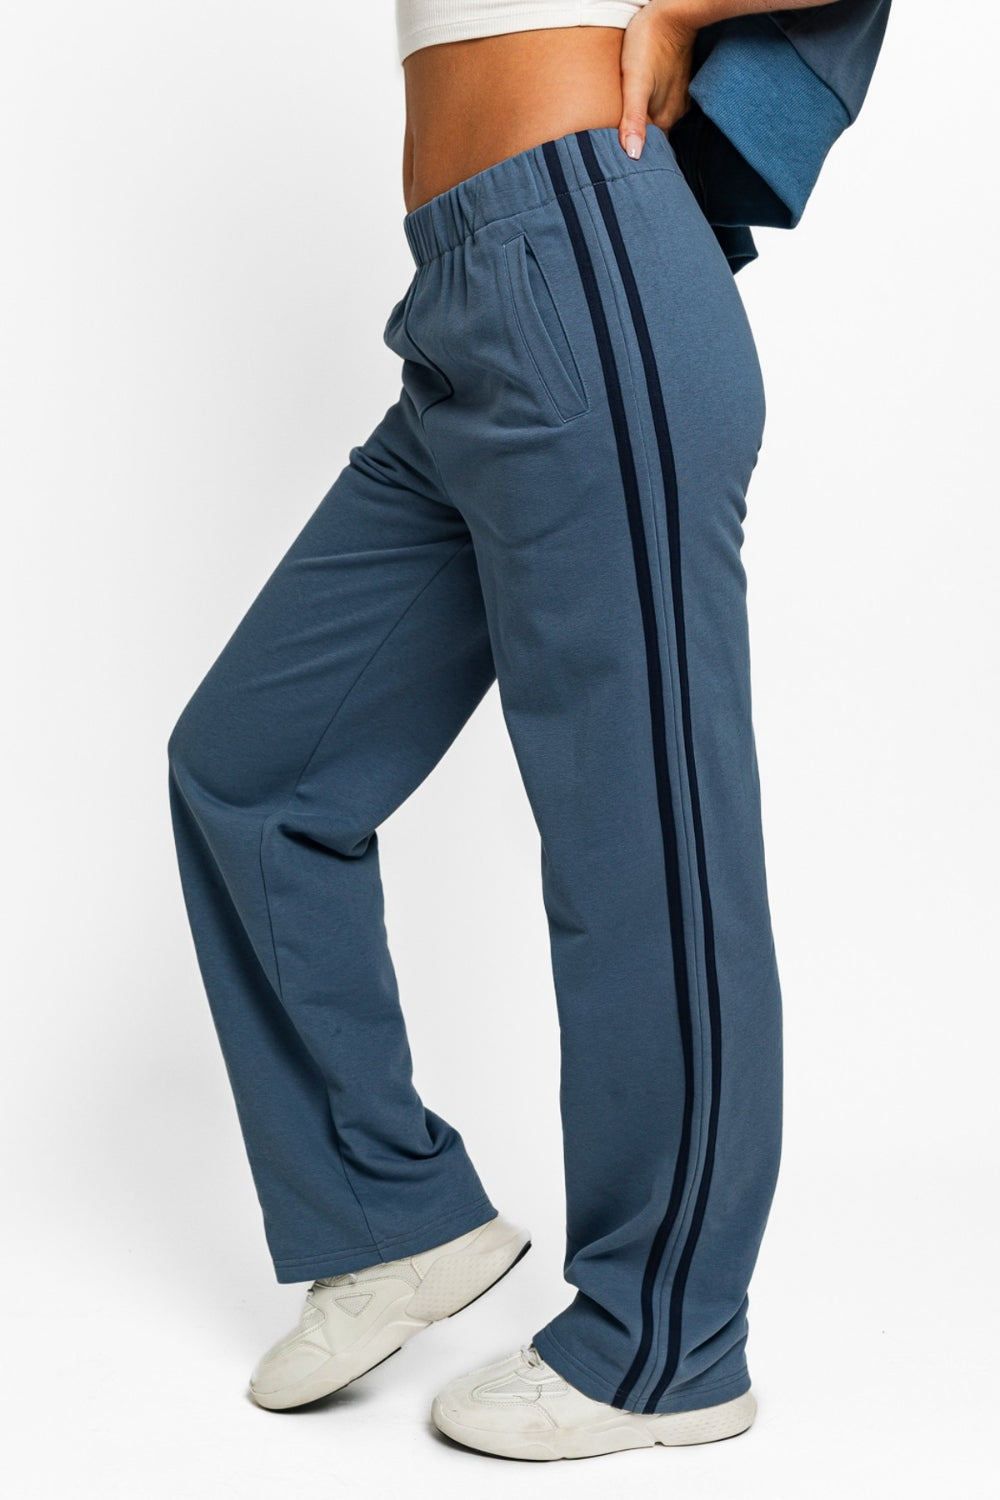 Tasha Apparel High Waisted Side Stripes Straight Track Sweatpants - Three Bears Boutique